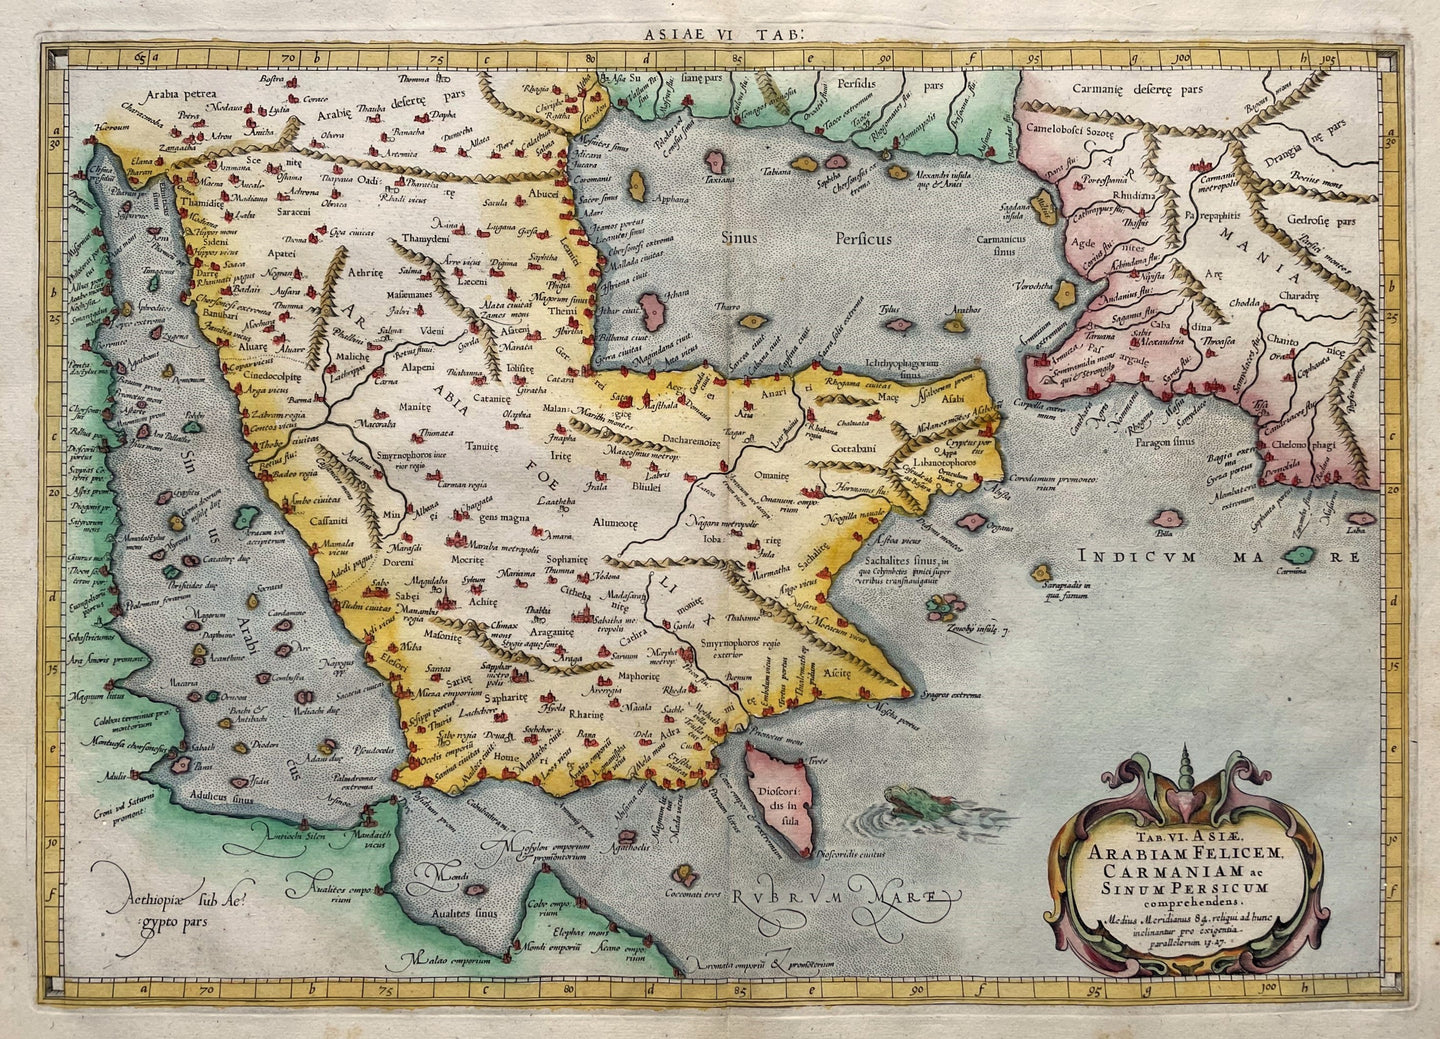 Arabië Arabian Peninsula Ptolemy map - C Ptolemaeüs / F Halma ed 1695 / G Mercator - 1578